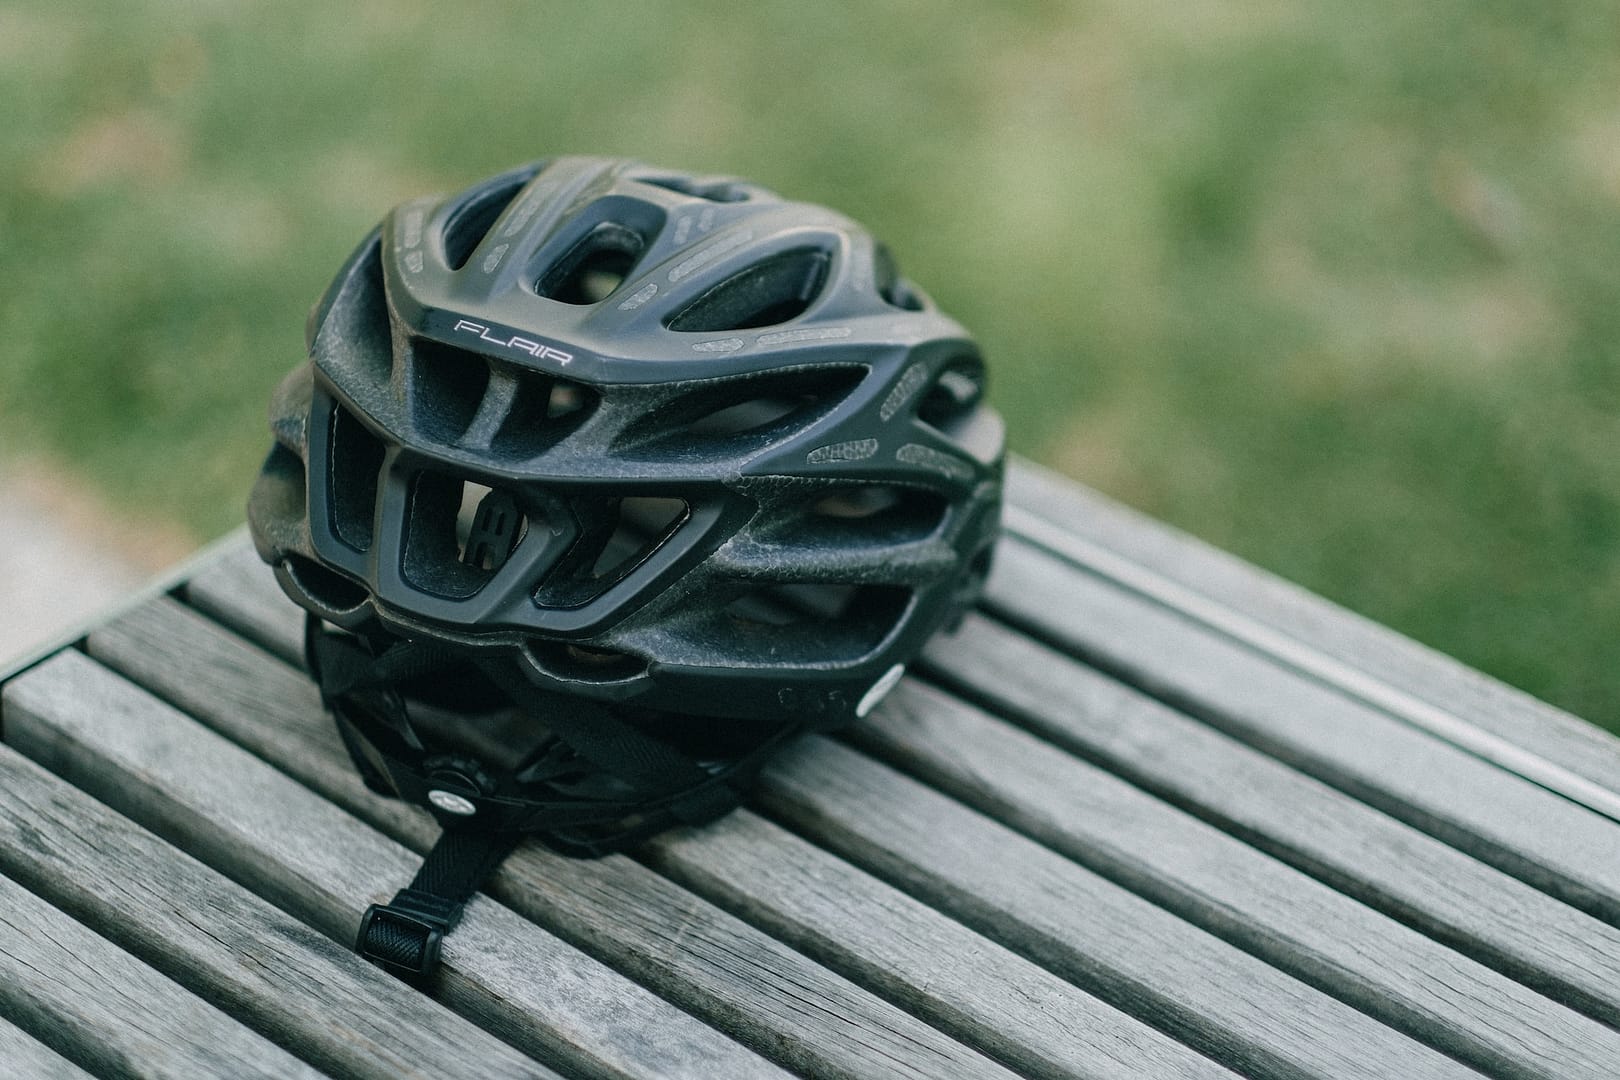 A cycling helmet